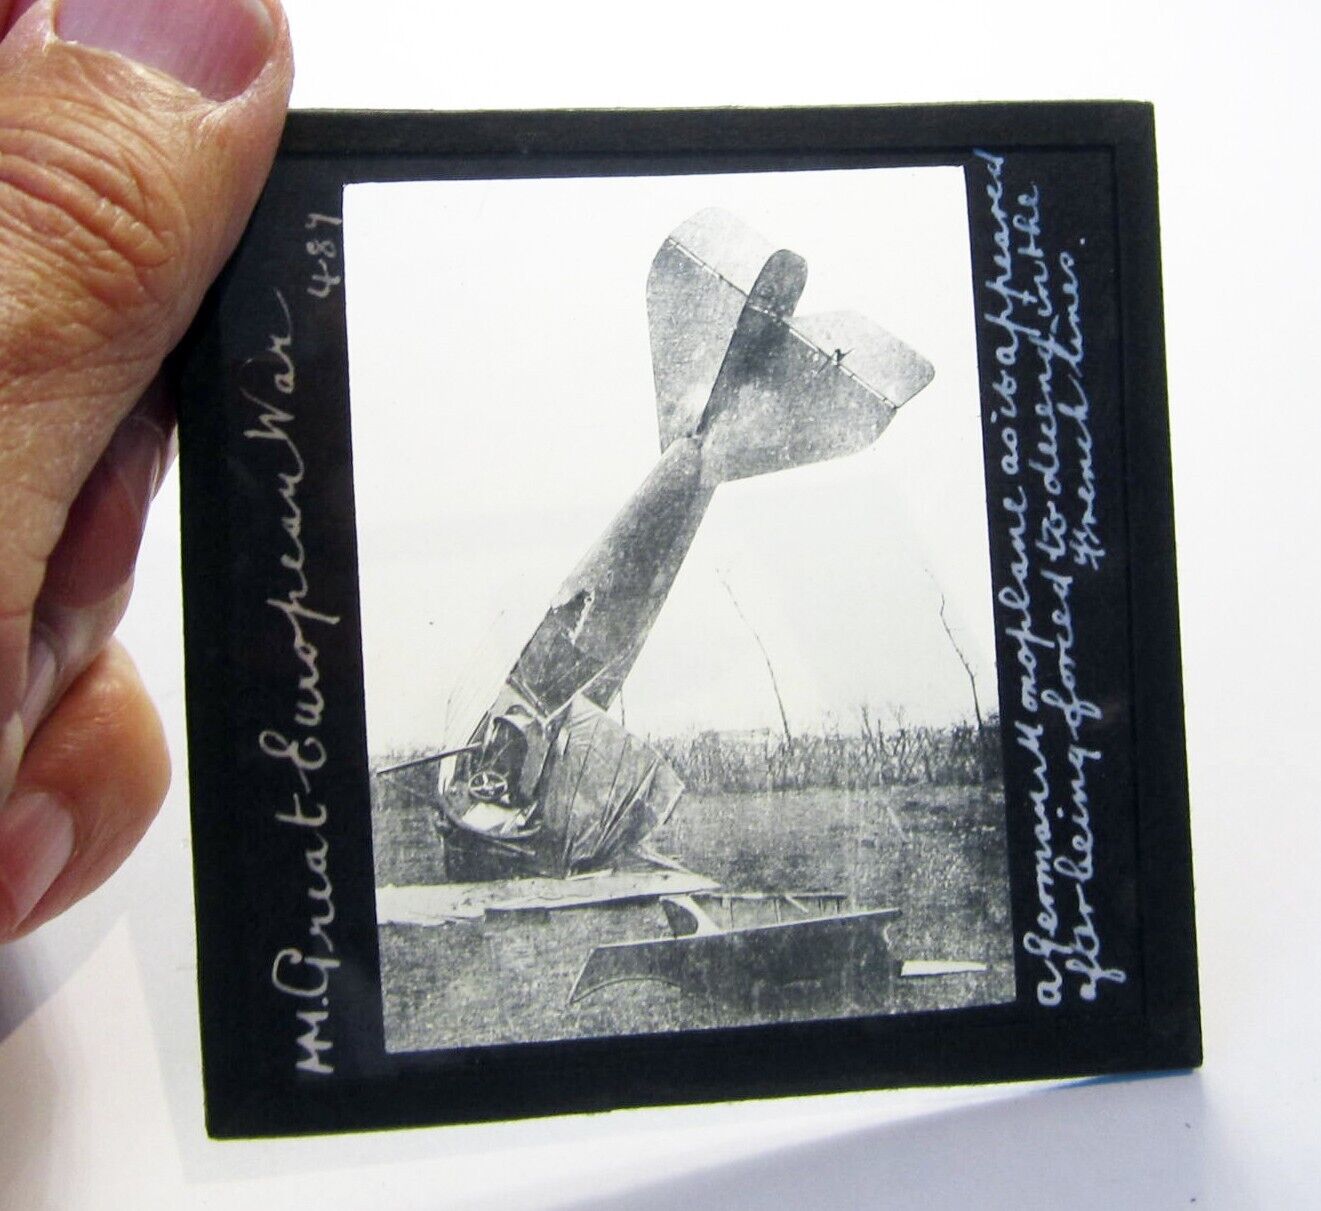 WW1 crashed German plane antique photo history magic lantern slide #7492